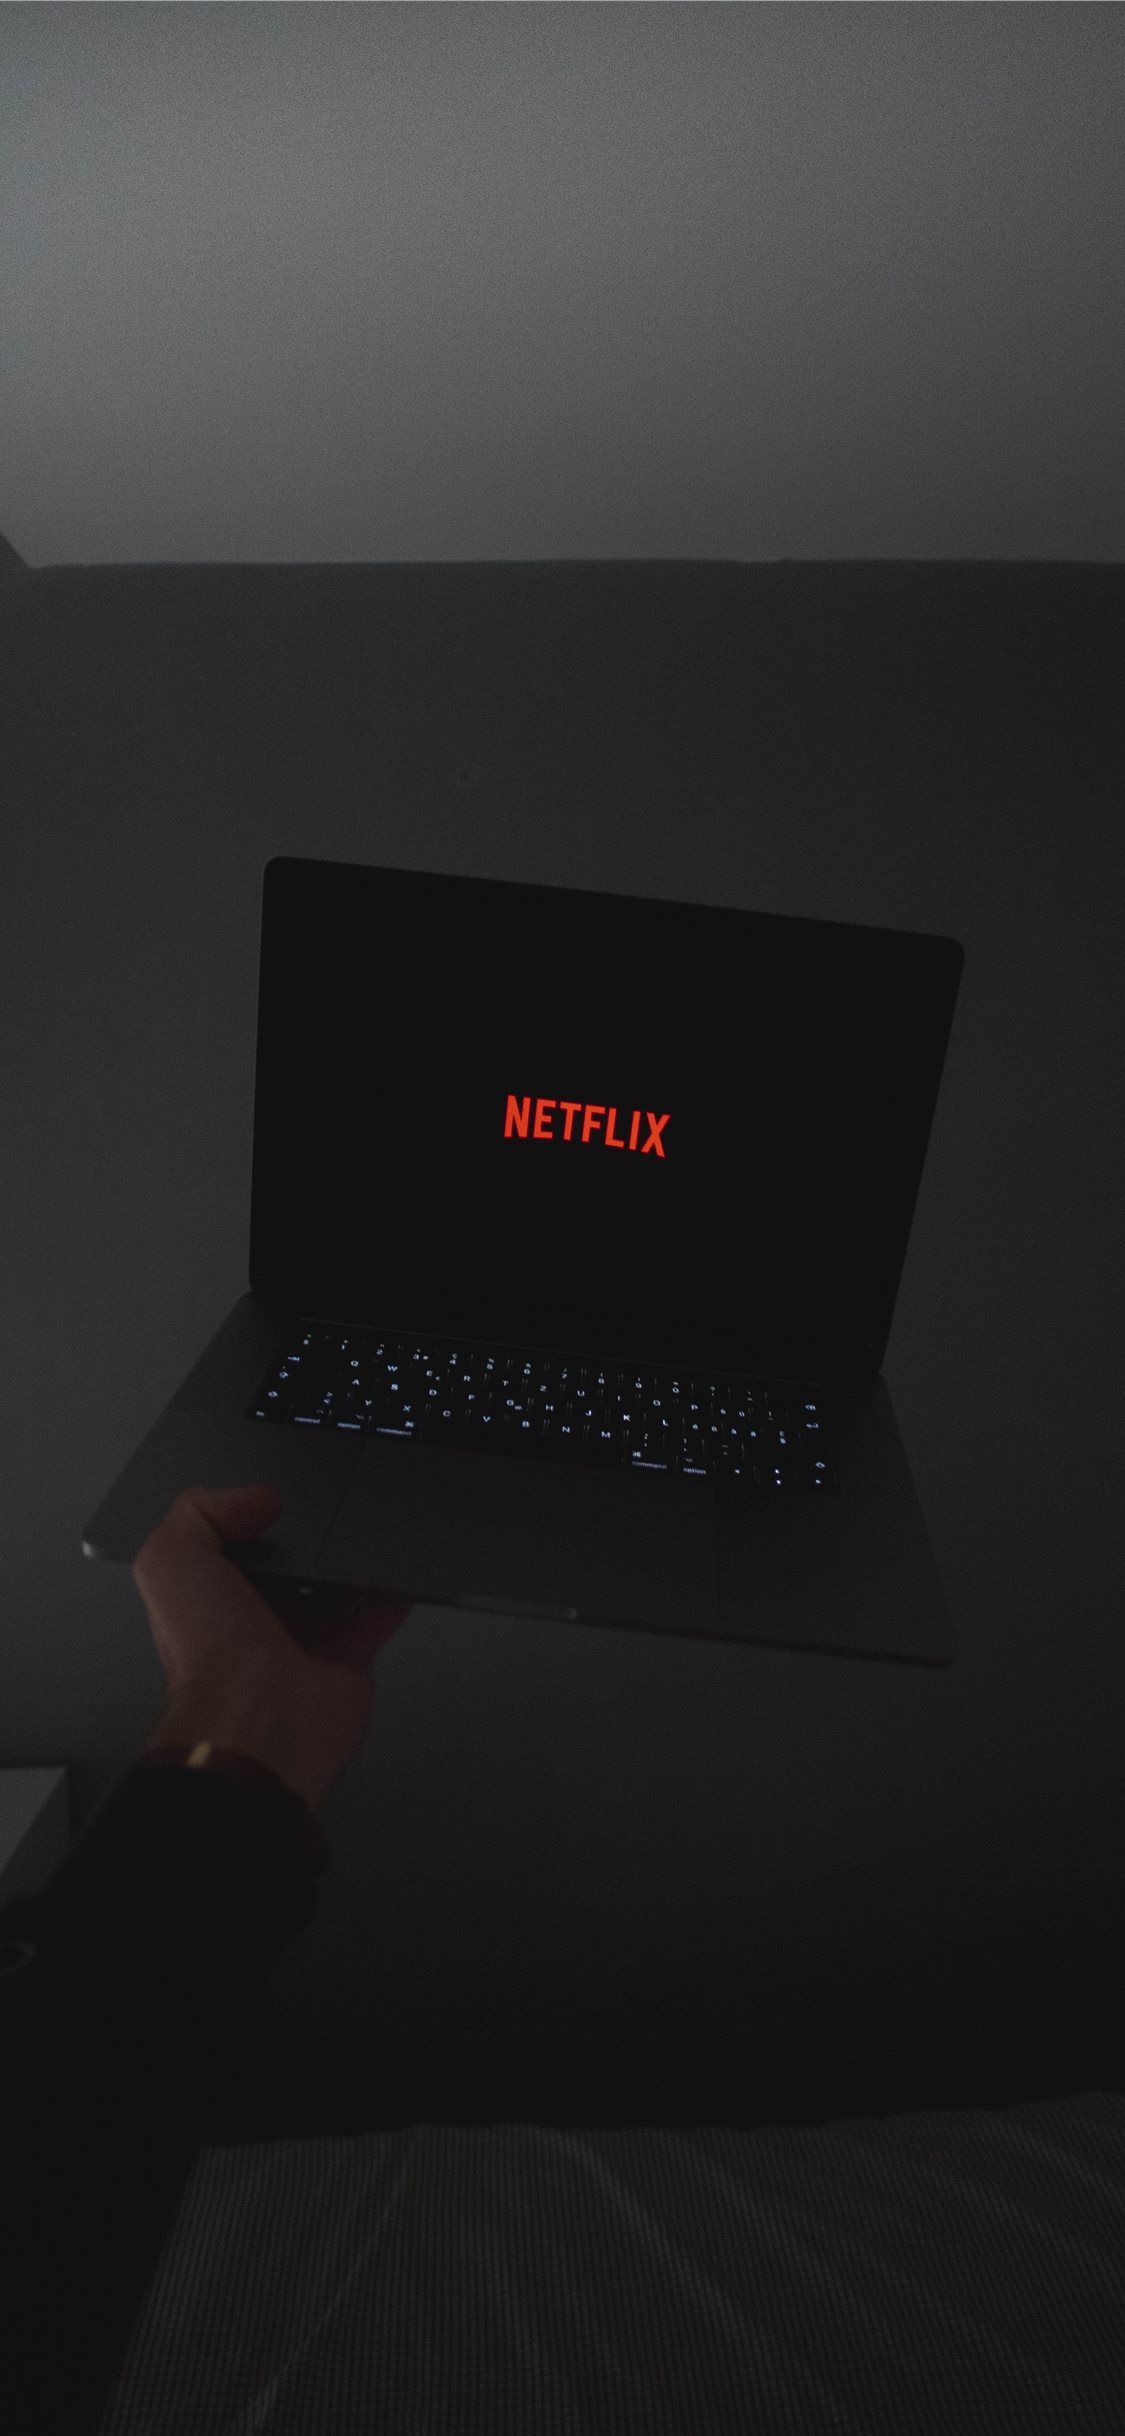 A laptop with netflix on the screen - Netflix